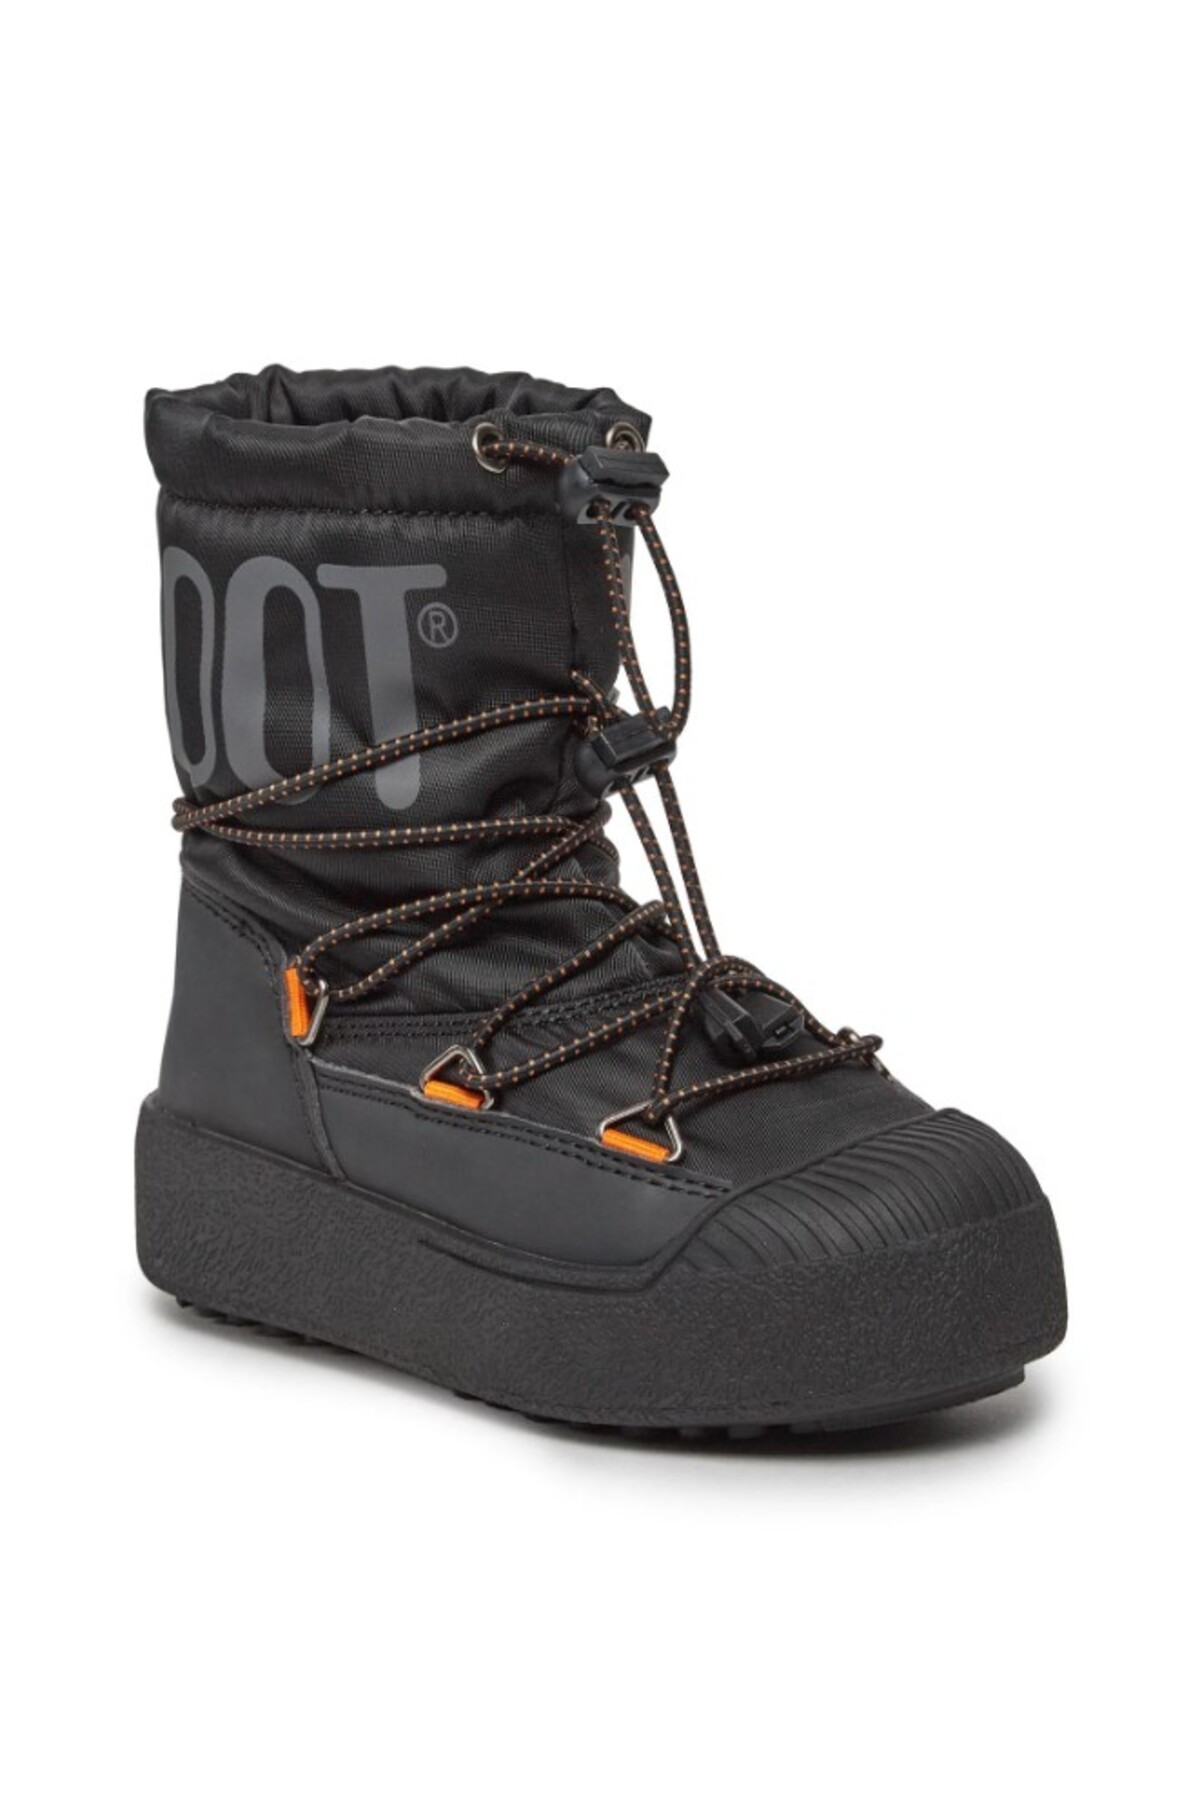 Moon Boot Winter Boots JTrack Polar Çocuk Kar Botu 34300500-001